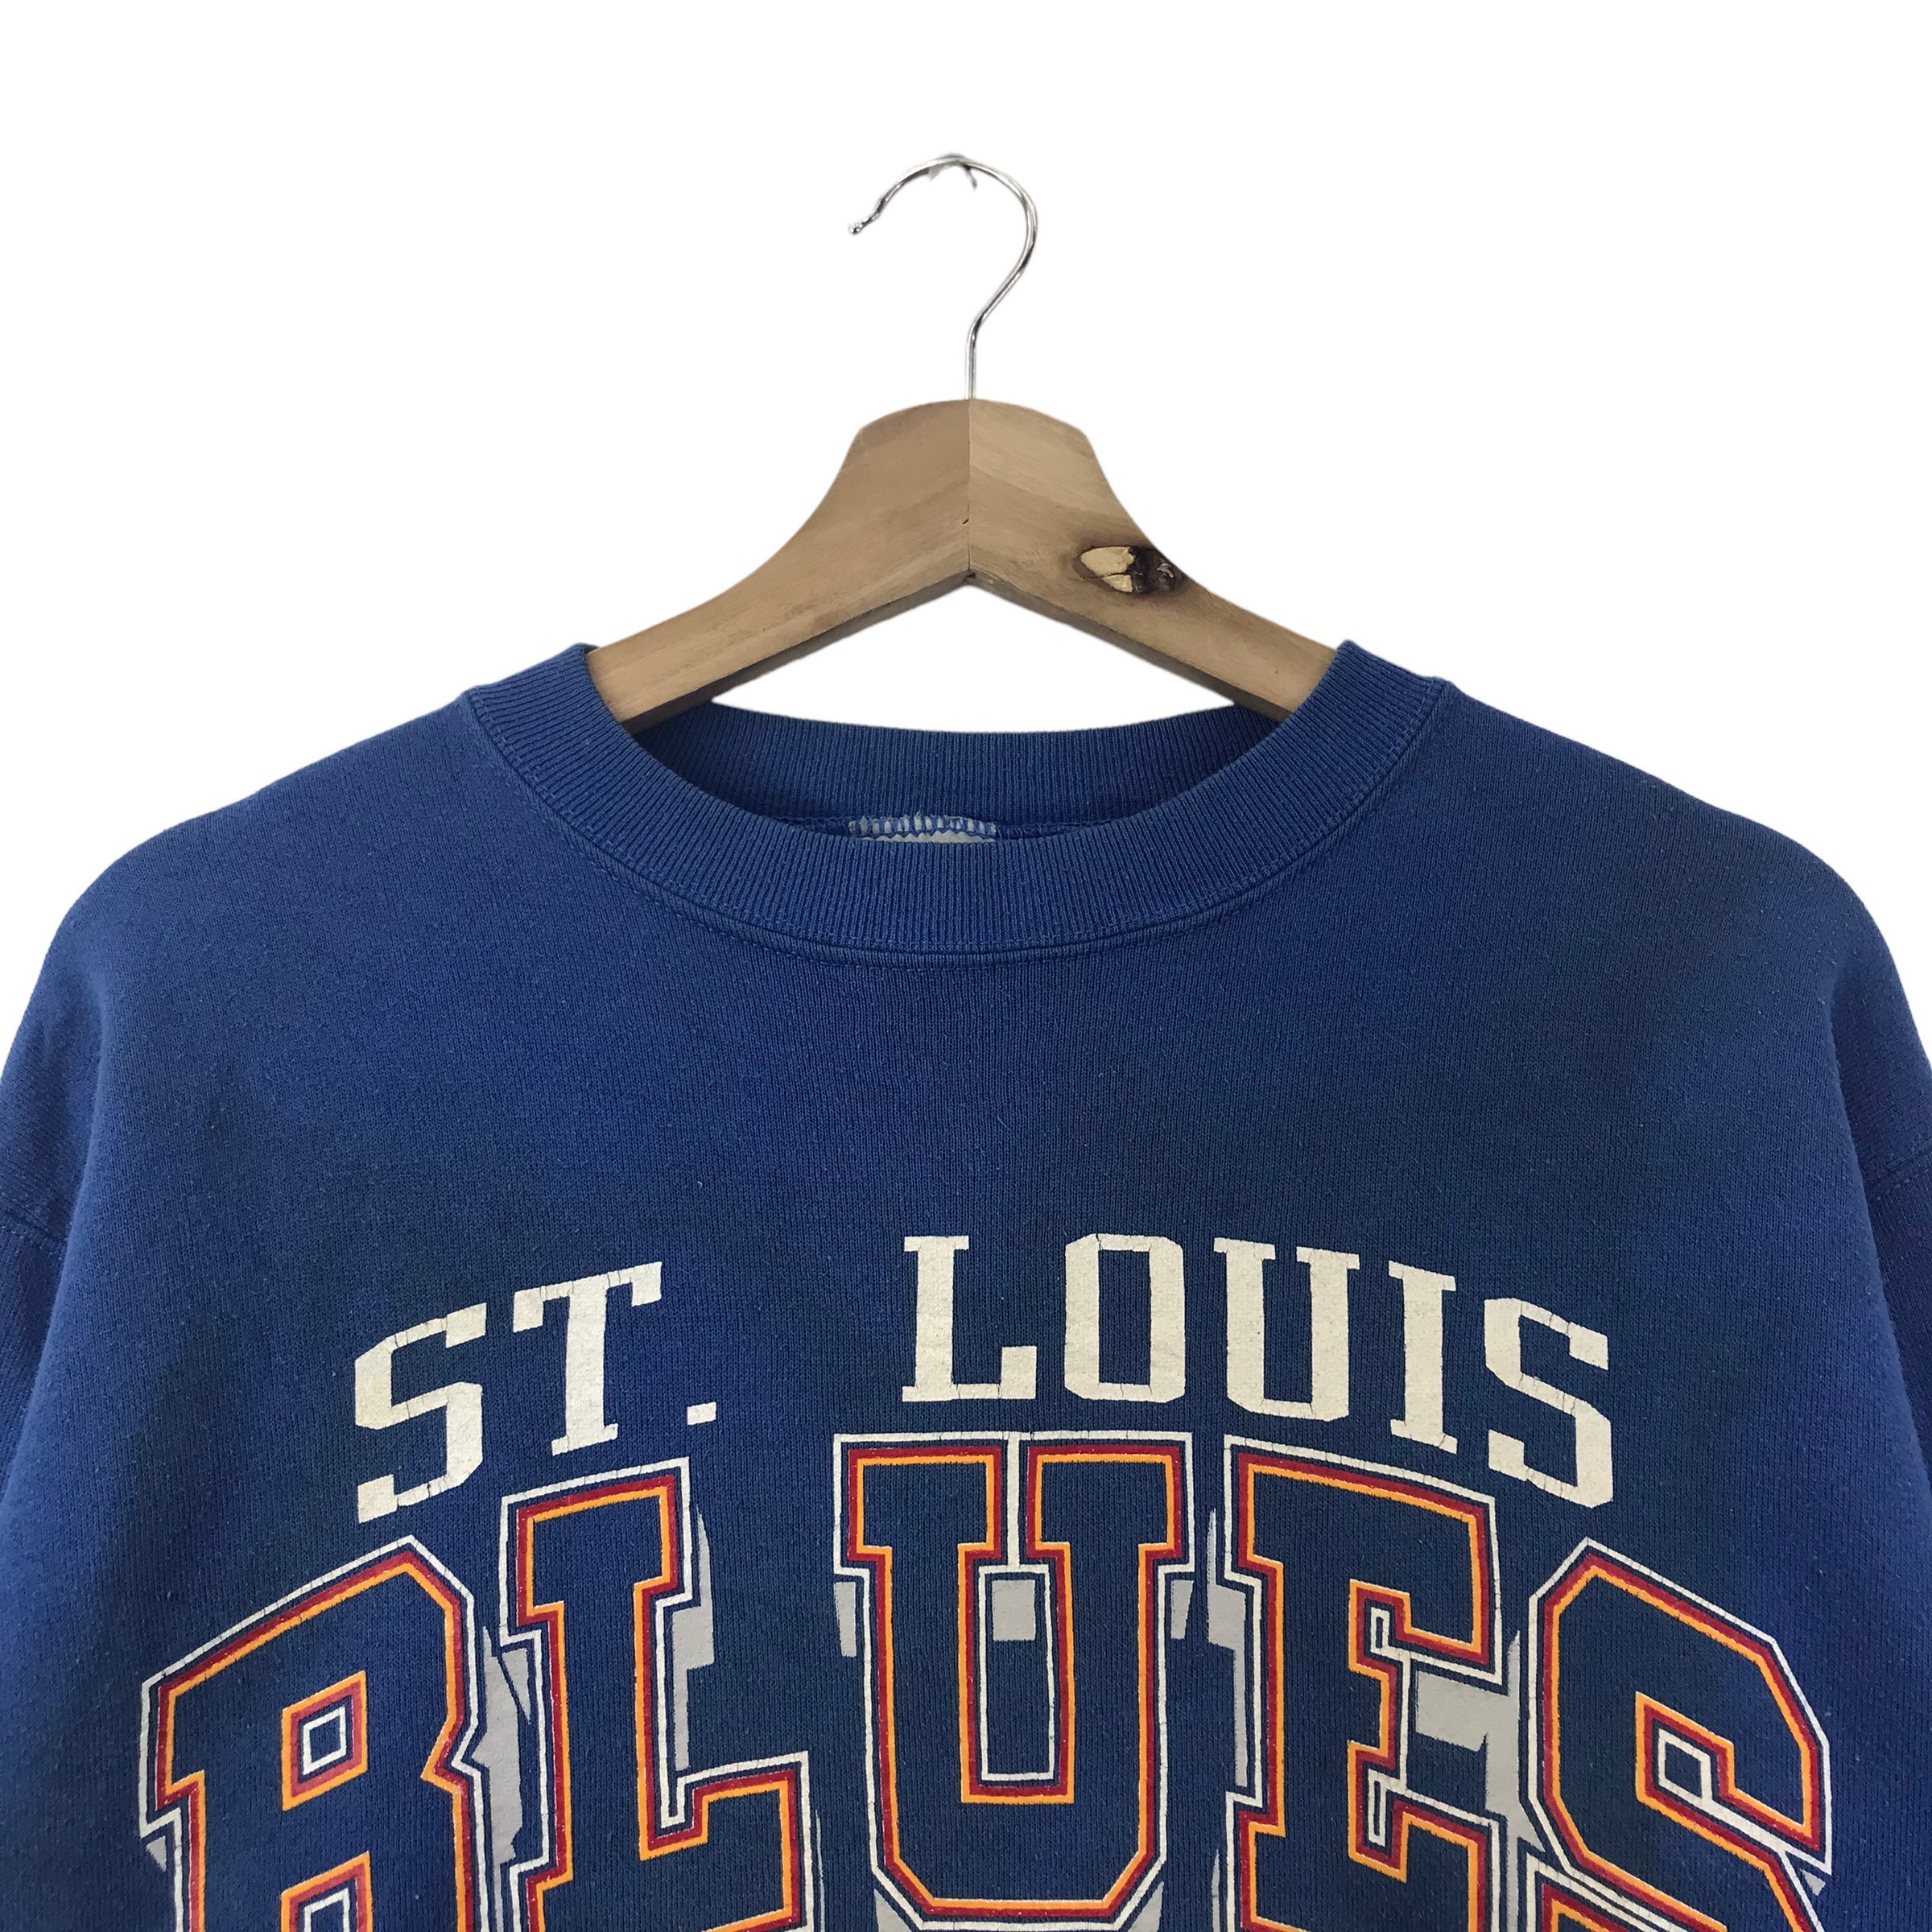 Vintage St Louis Blues Logo 7 Wool Snapback Hat Cap OSFA 90s NHL